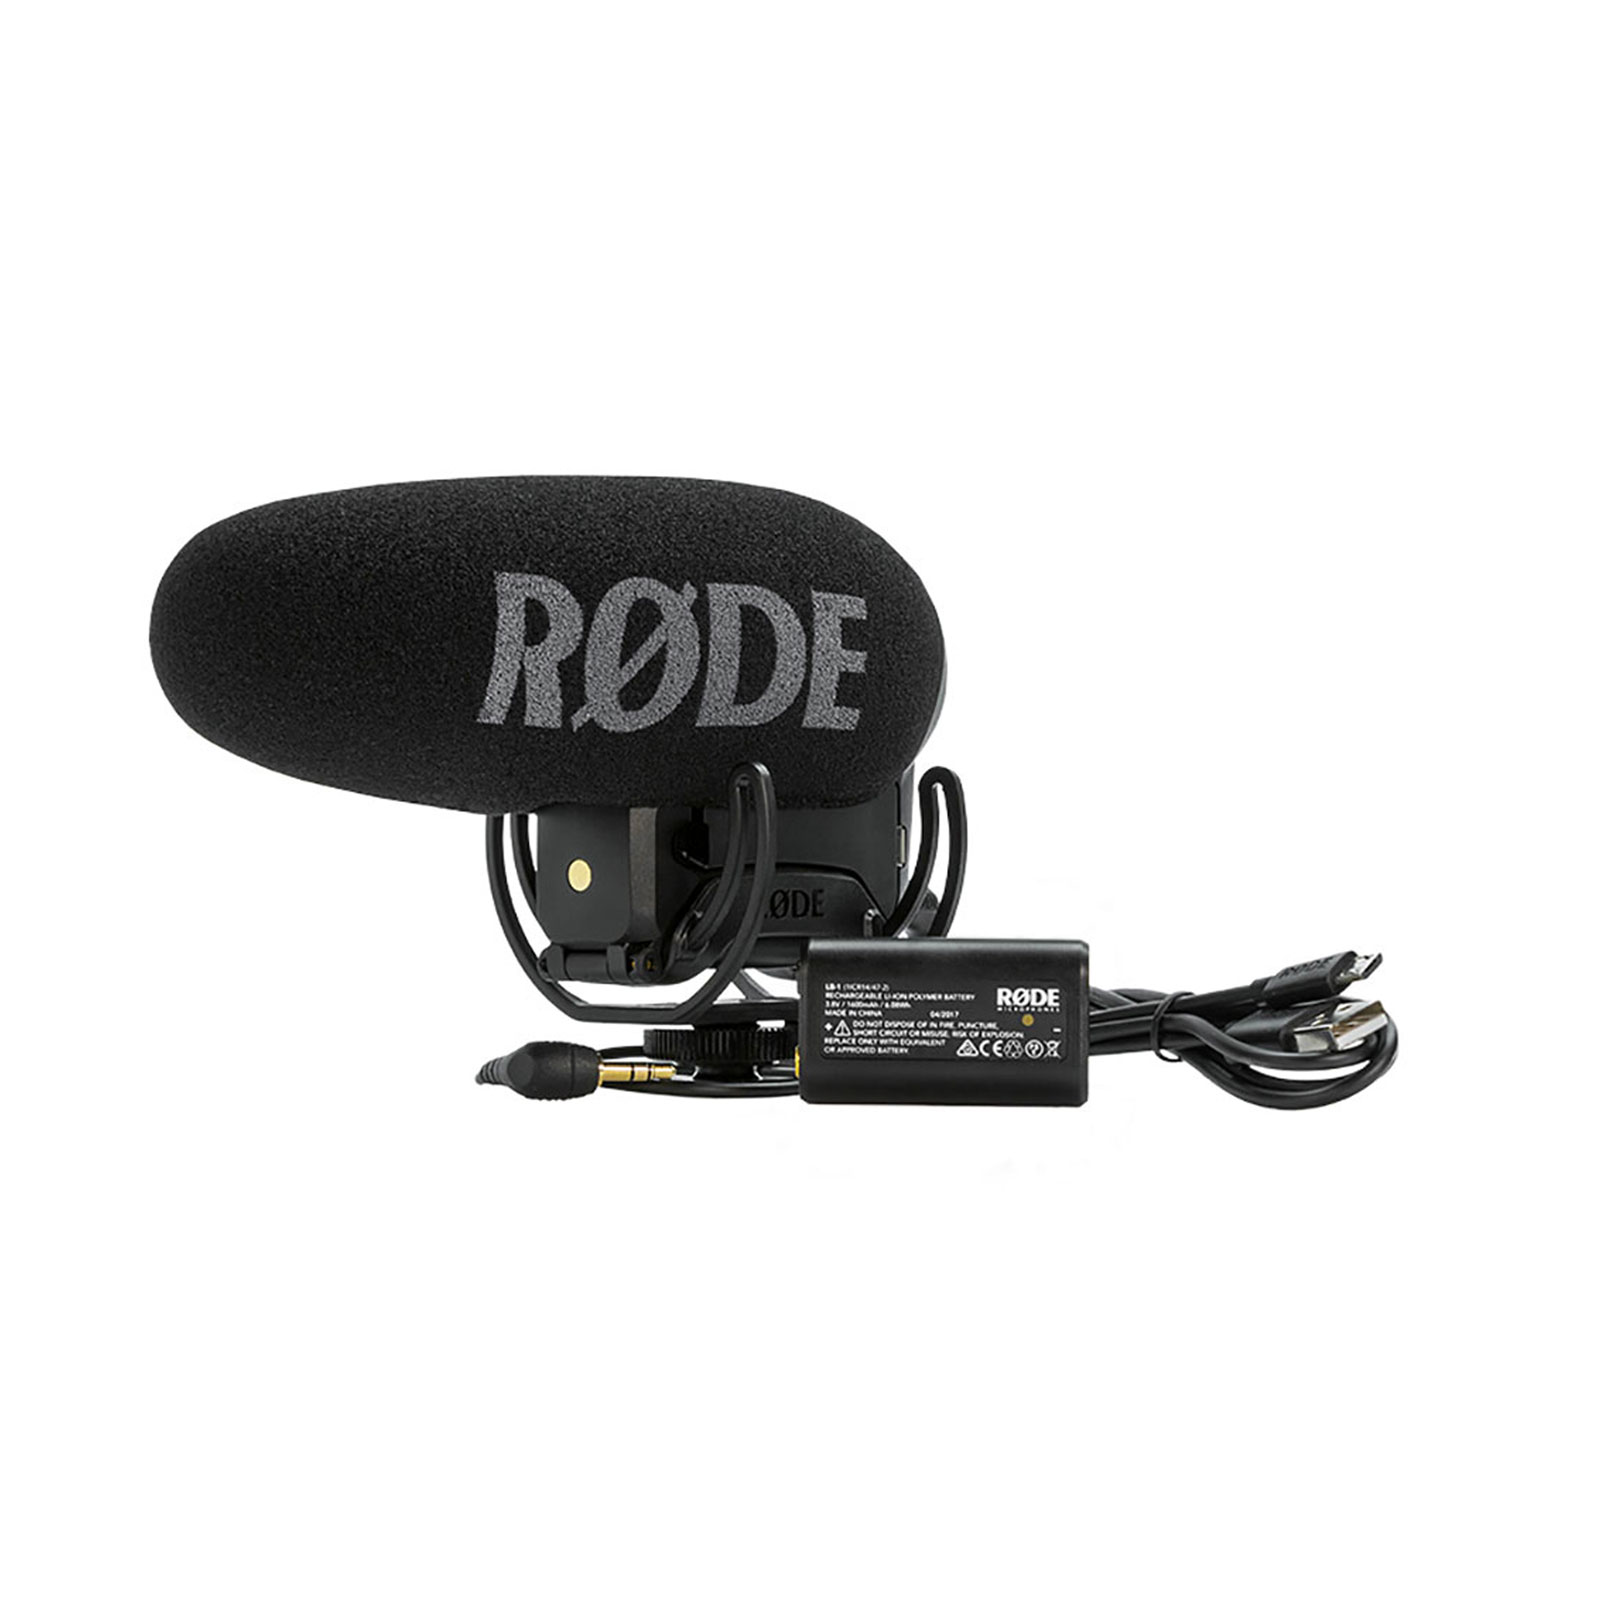 RØDE VIDEOMICRO Compact On-Camera Microphone VMICRO - Best Buy